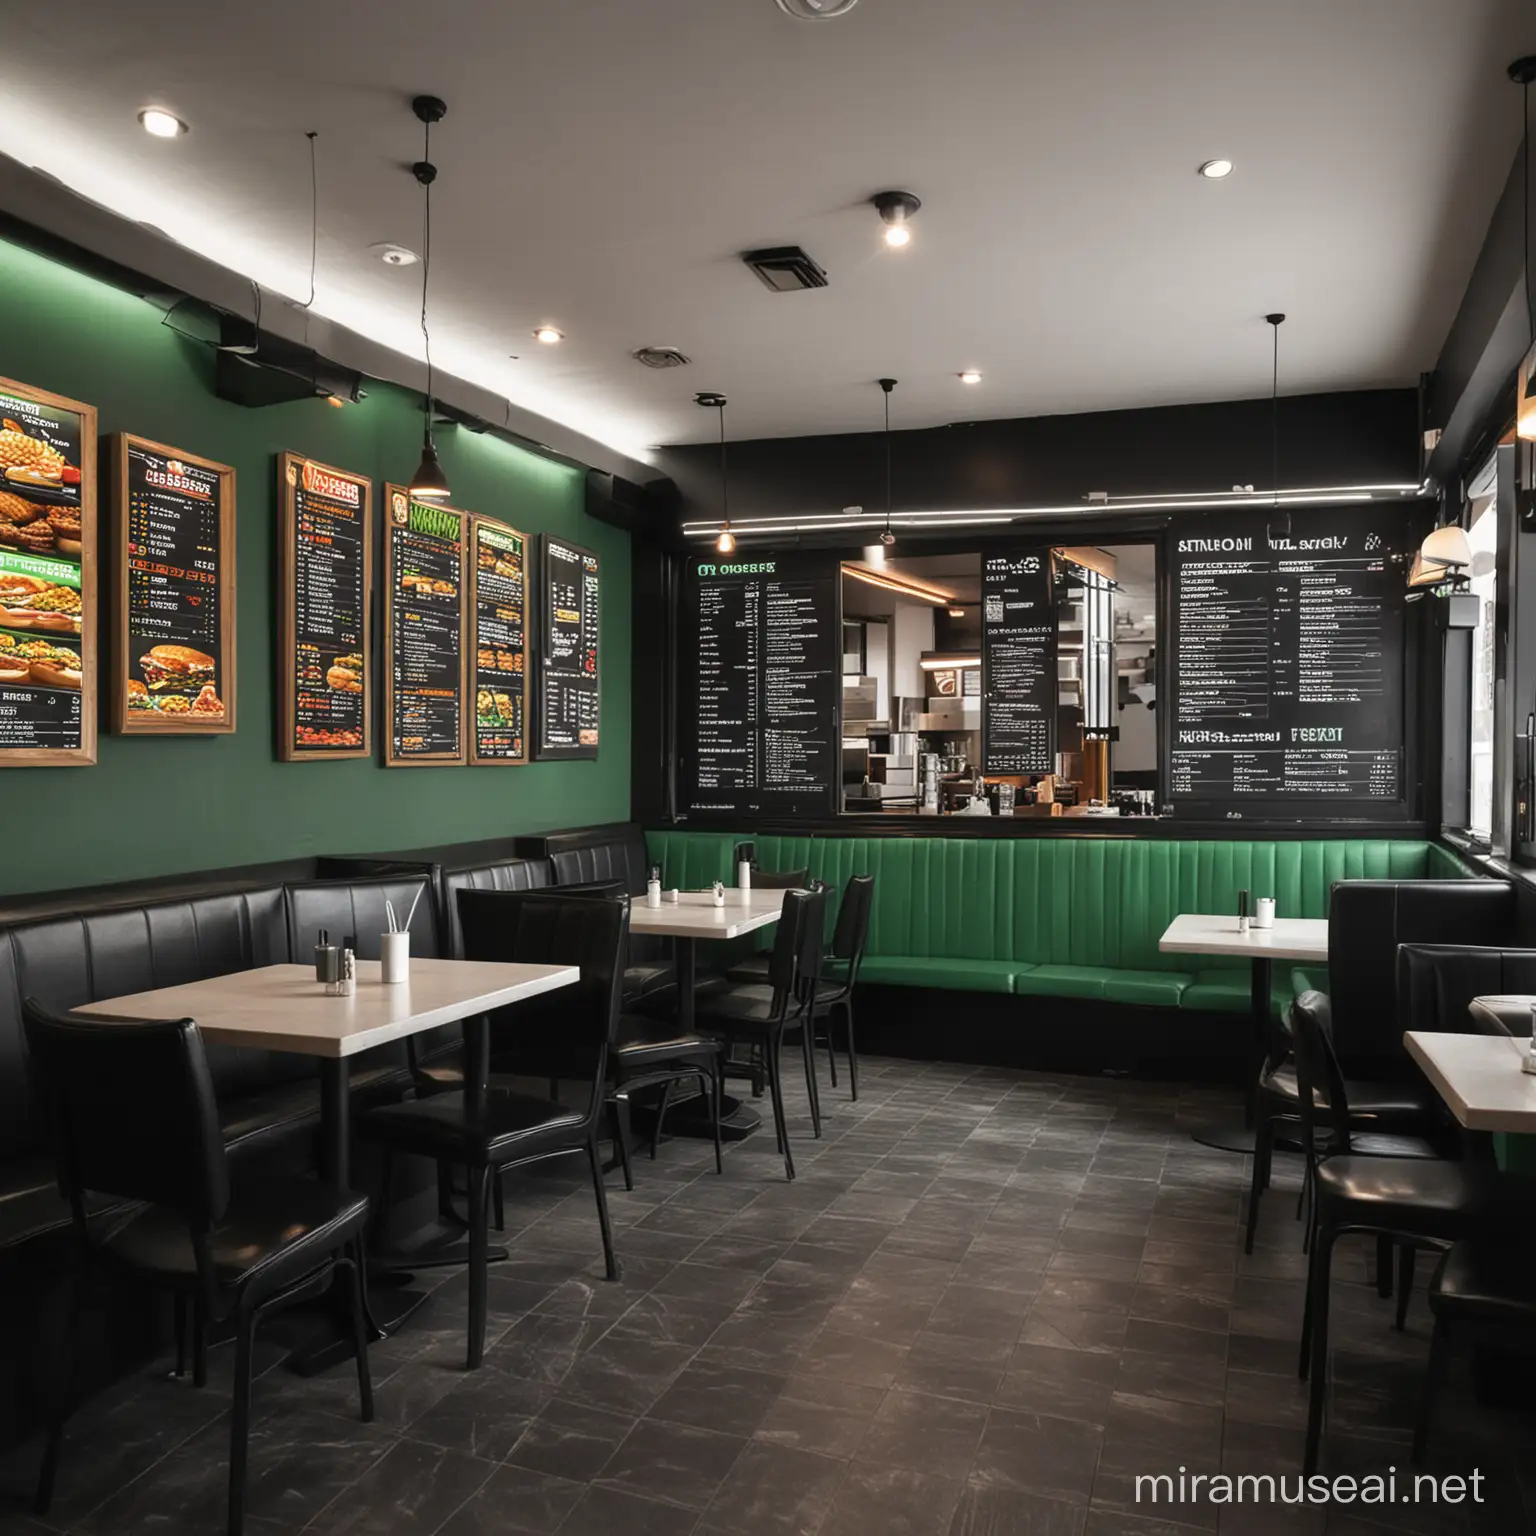 Modern Fast Food Restaurant Interior in Sleek Black and Green